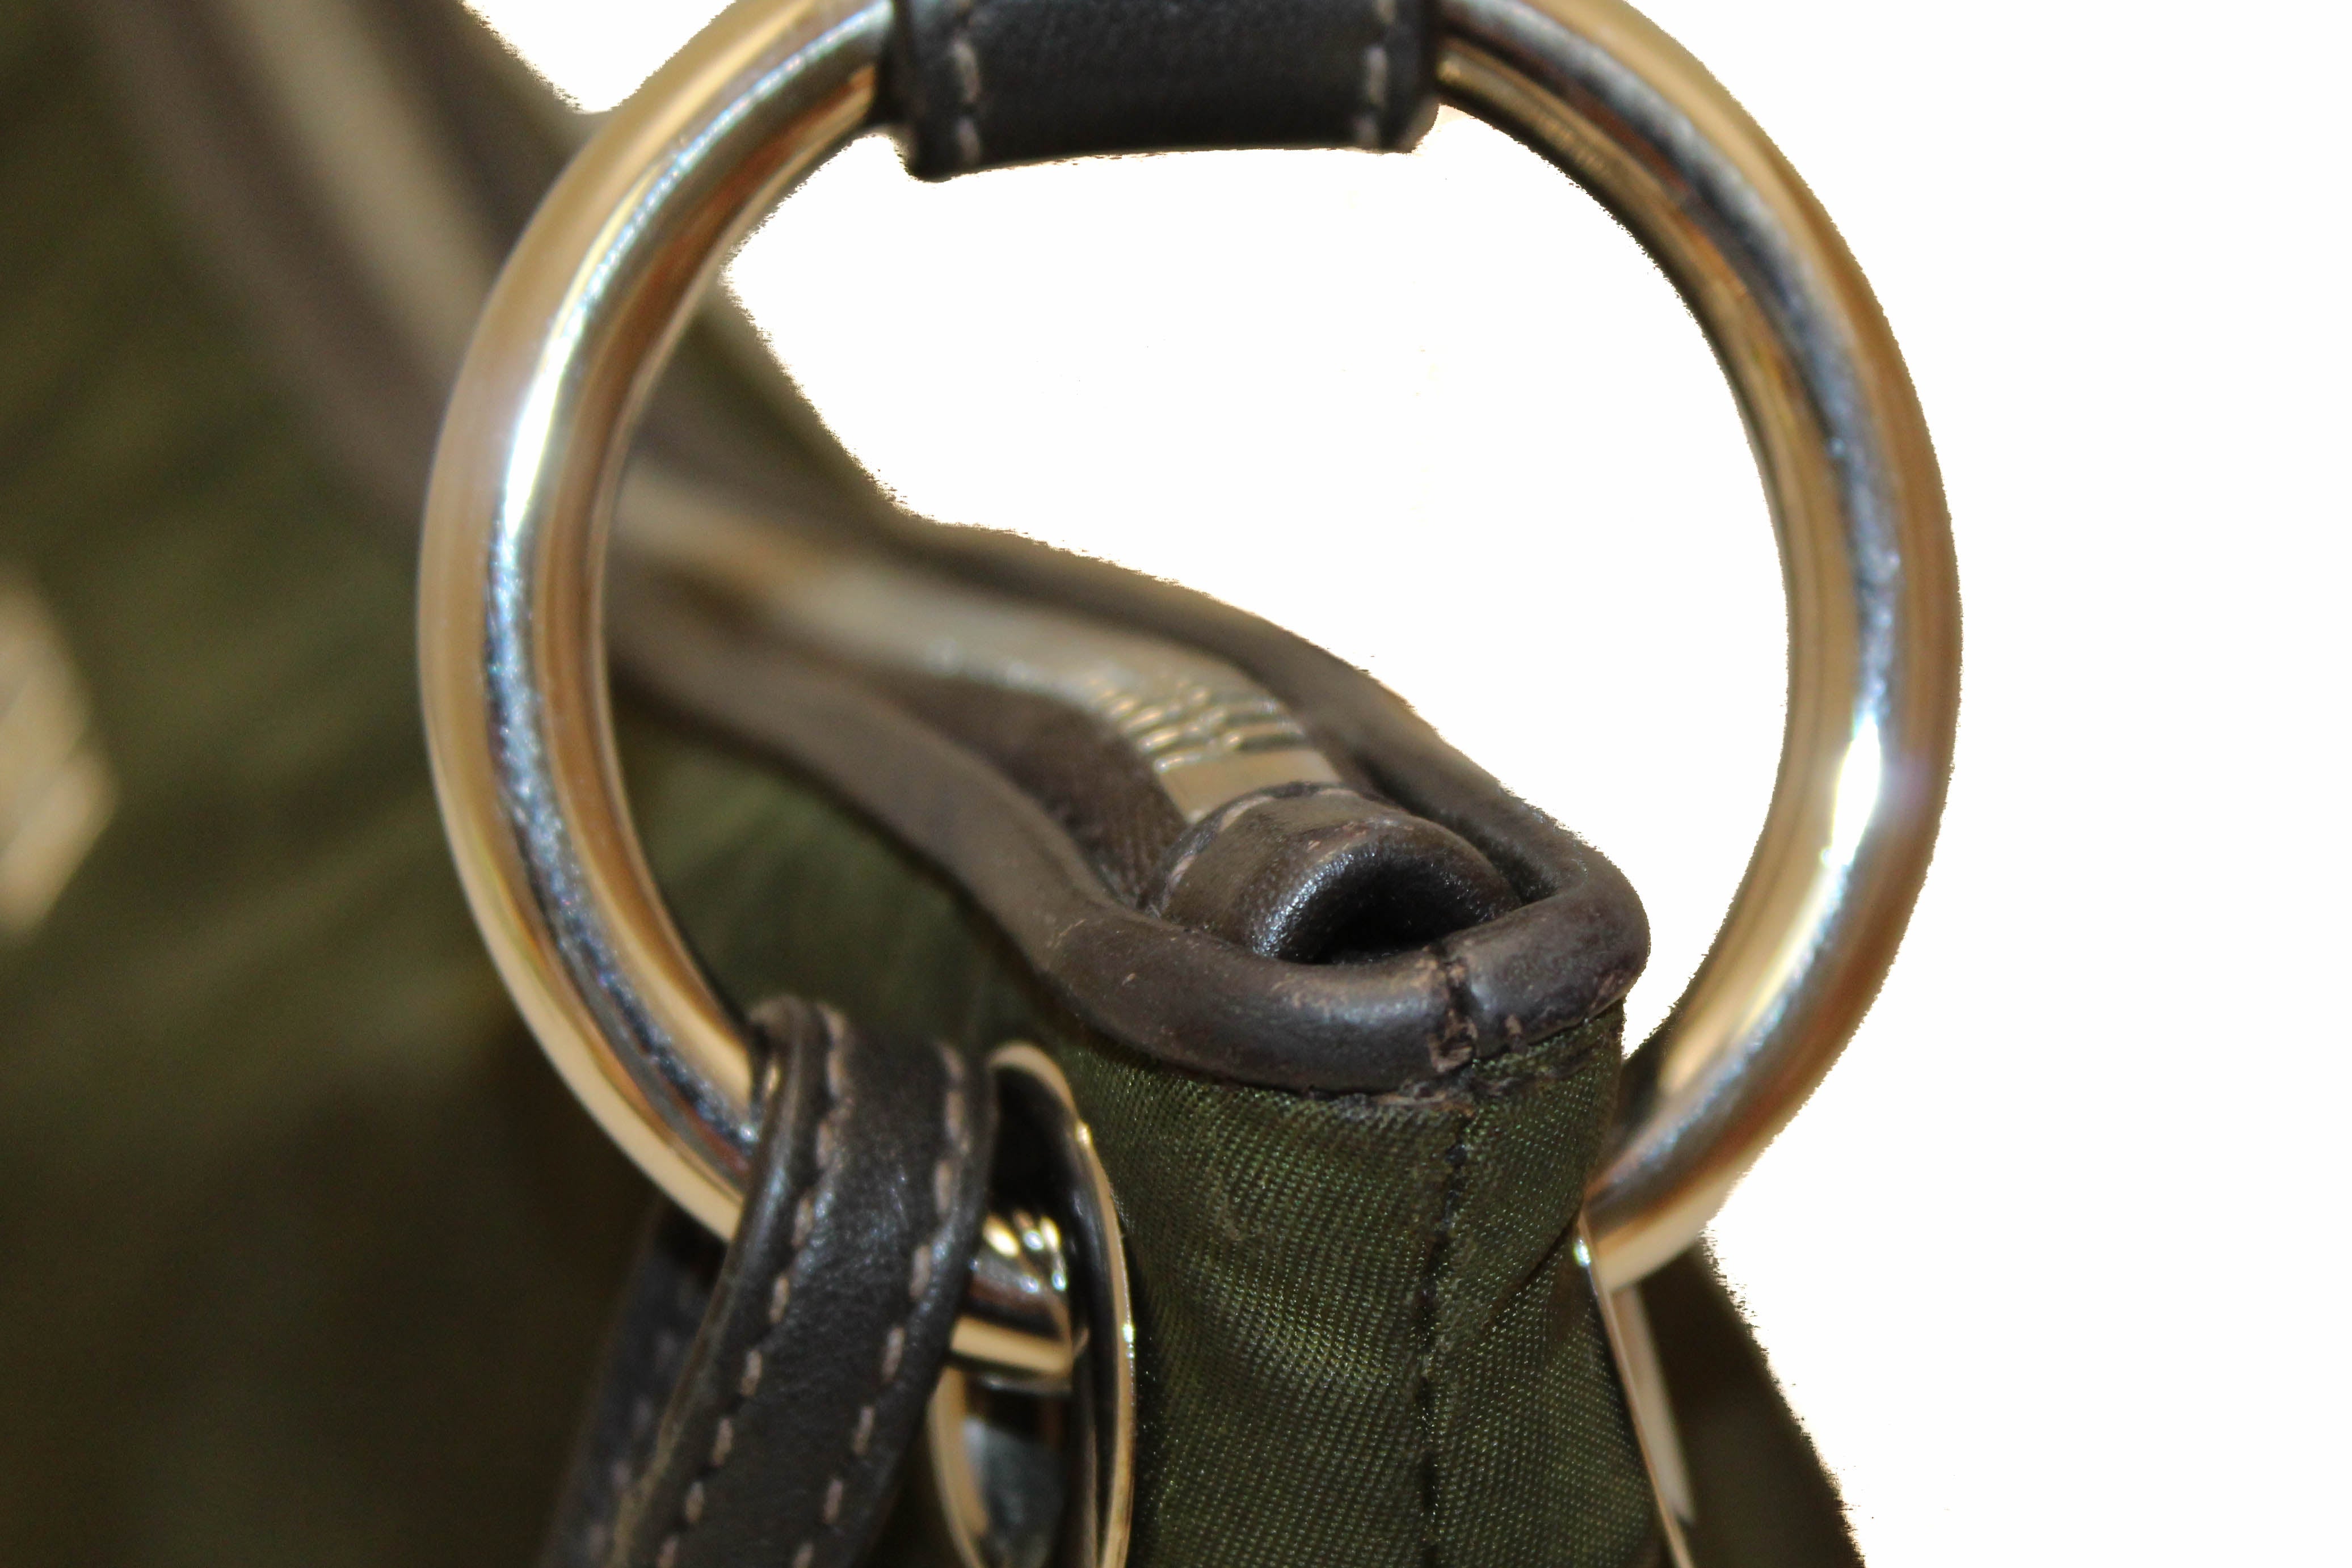 Authentic PRADA Green Nylon Chain Shoulder Bag Purse #49819